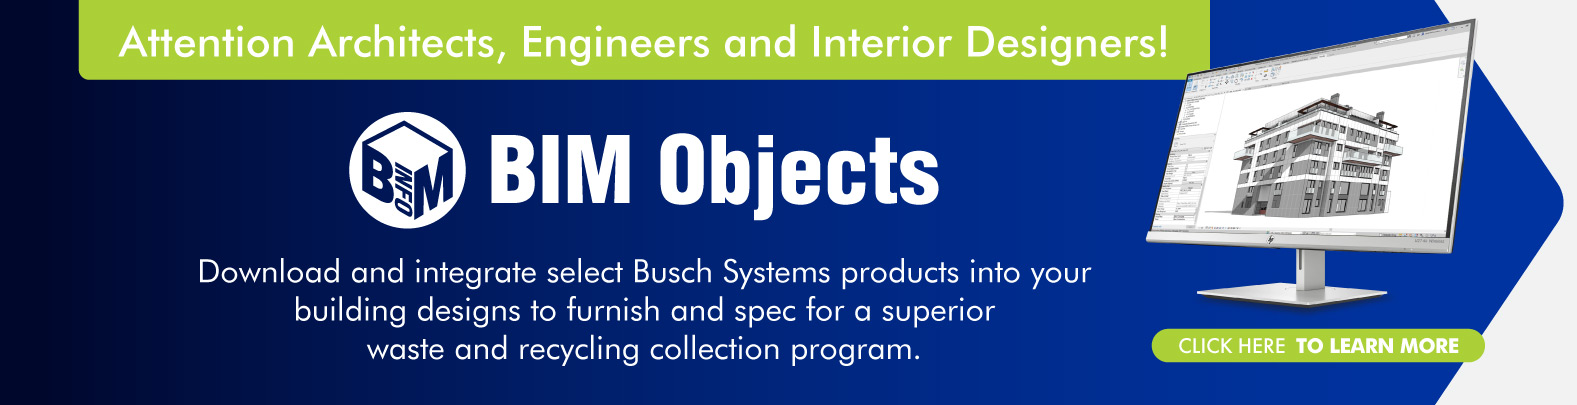 BIM-Objects_Banner-Ad.jpg